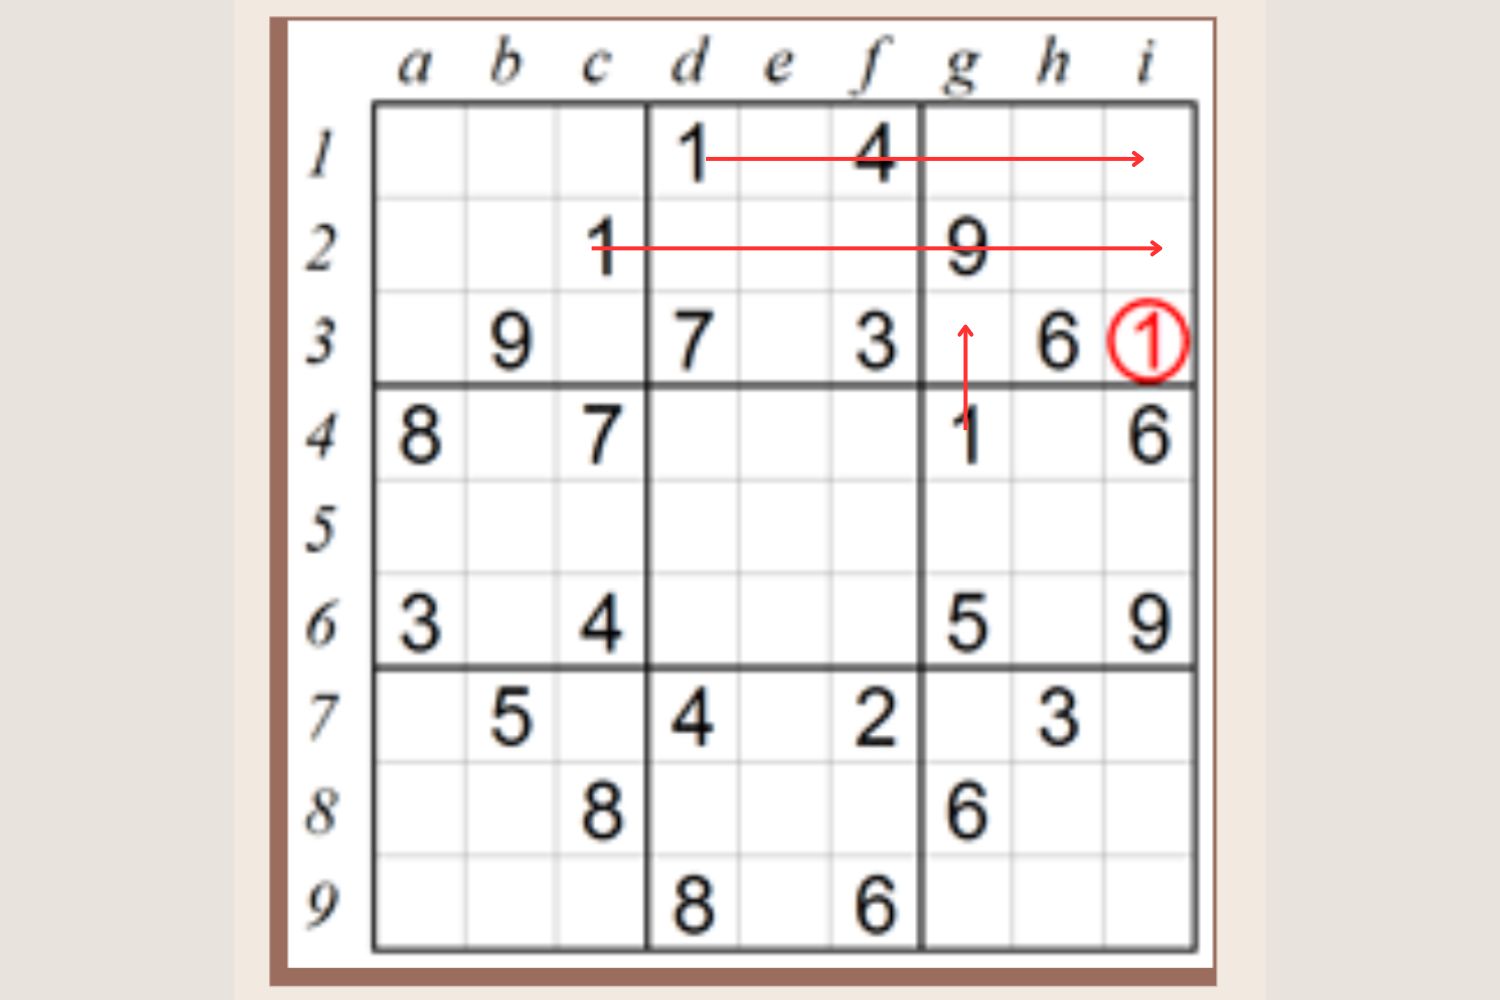 2) Efficient Scanning Techniques to Solve Sudoku Puzzles